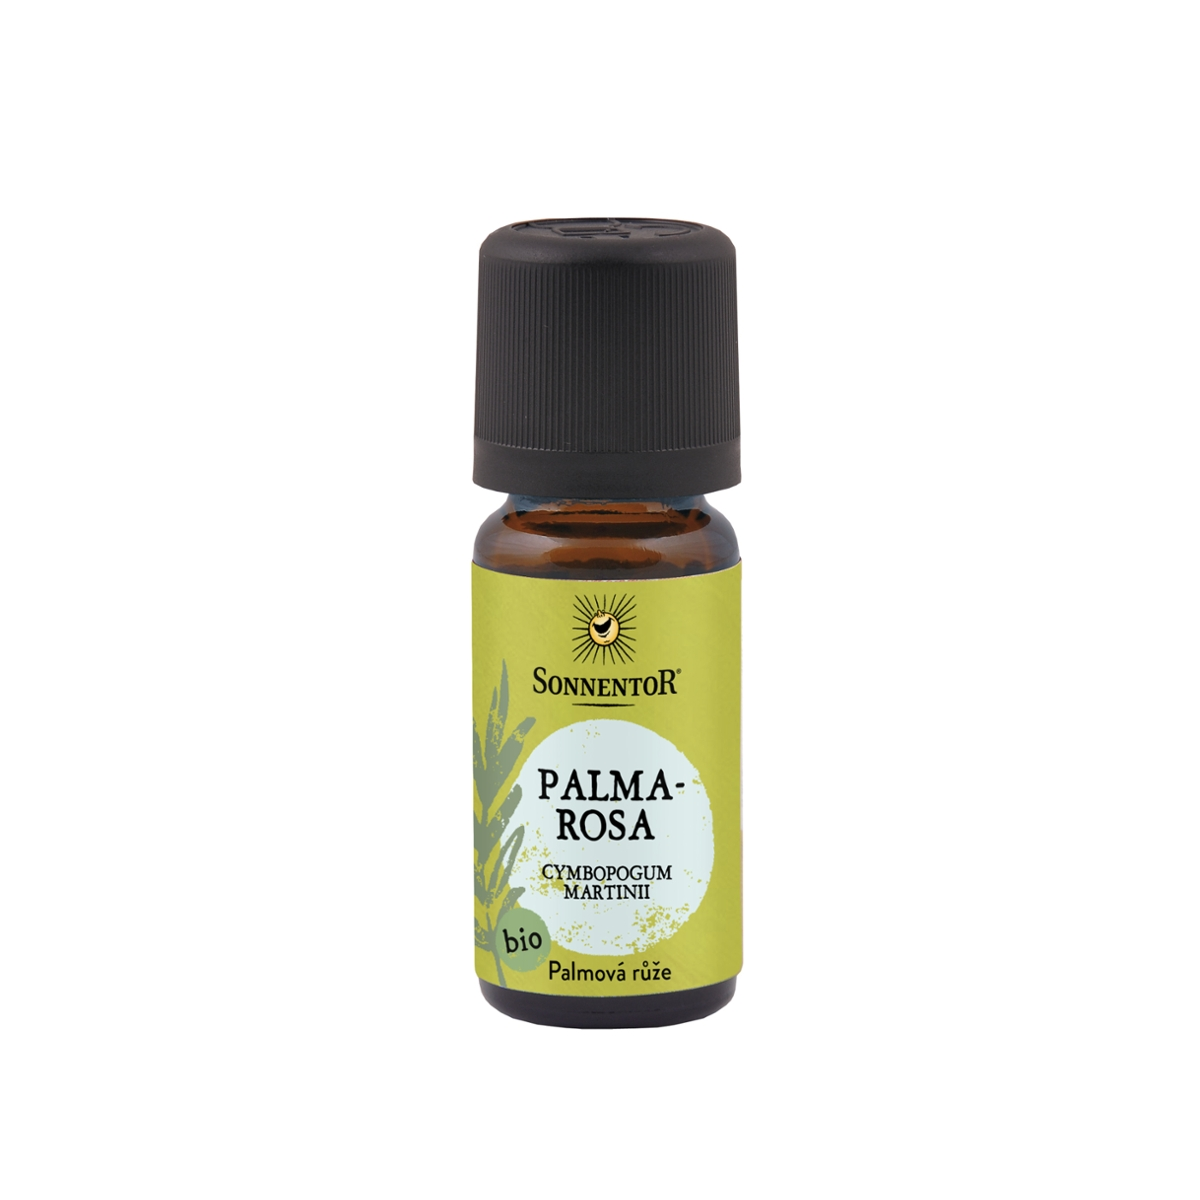 Sonnentor - Palmarosa ätherisches Öl